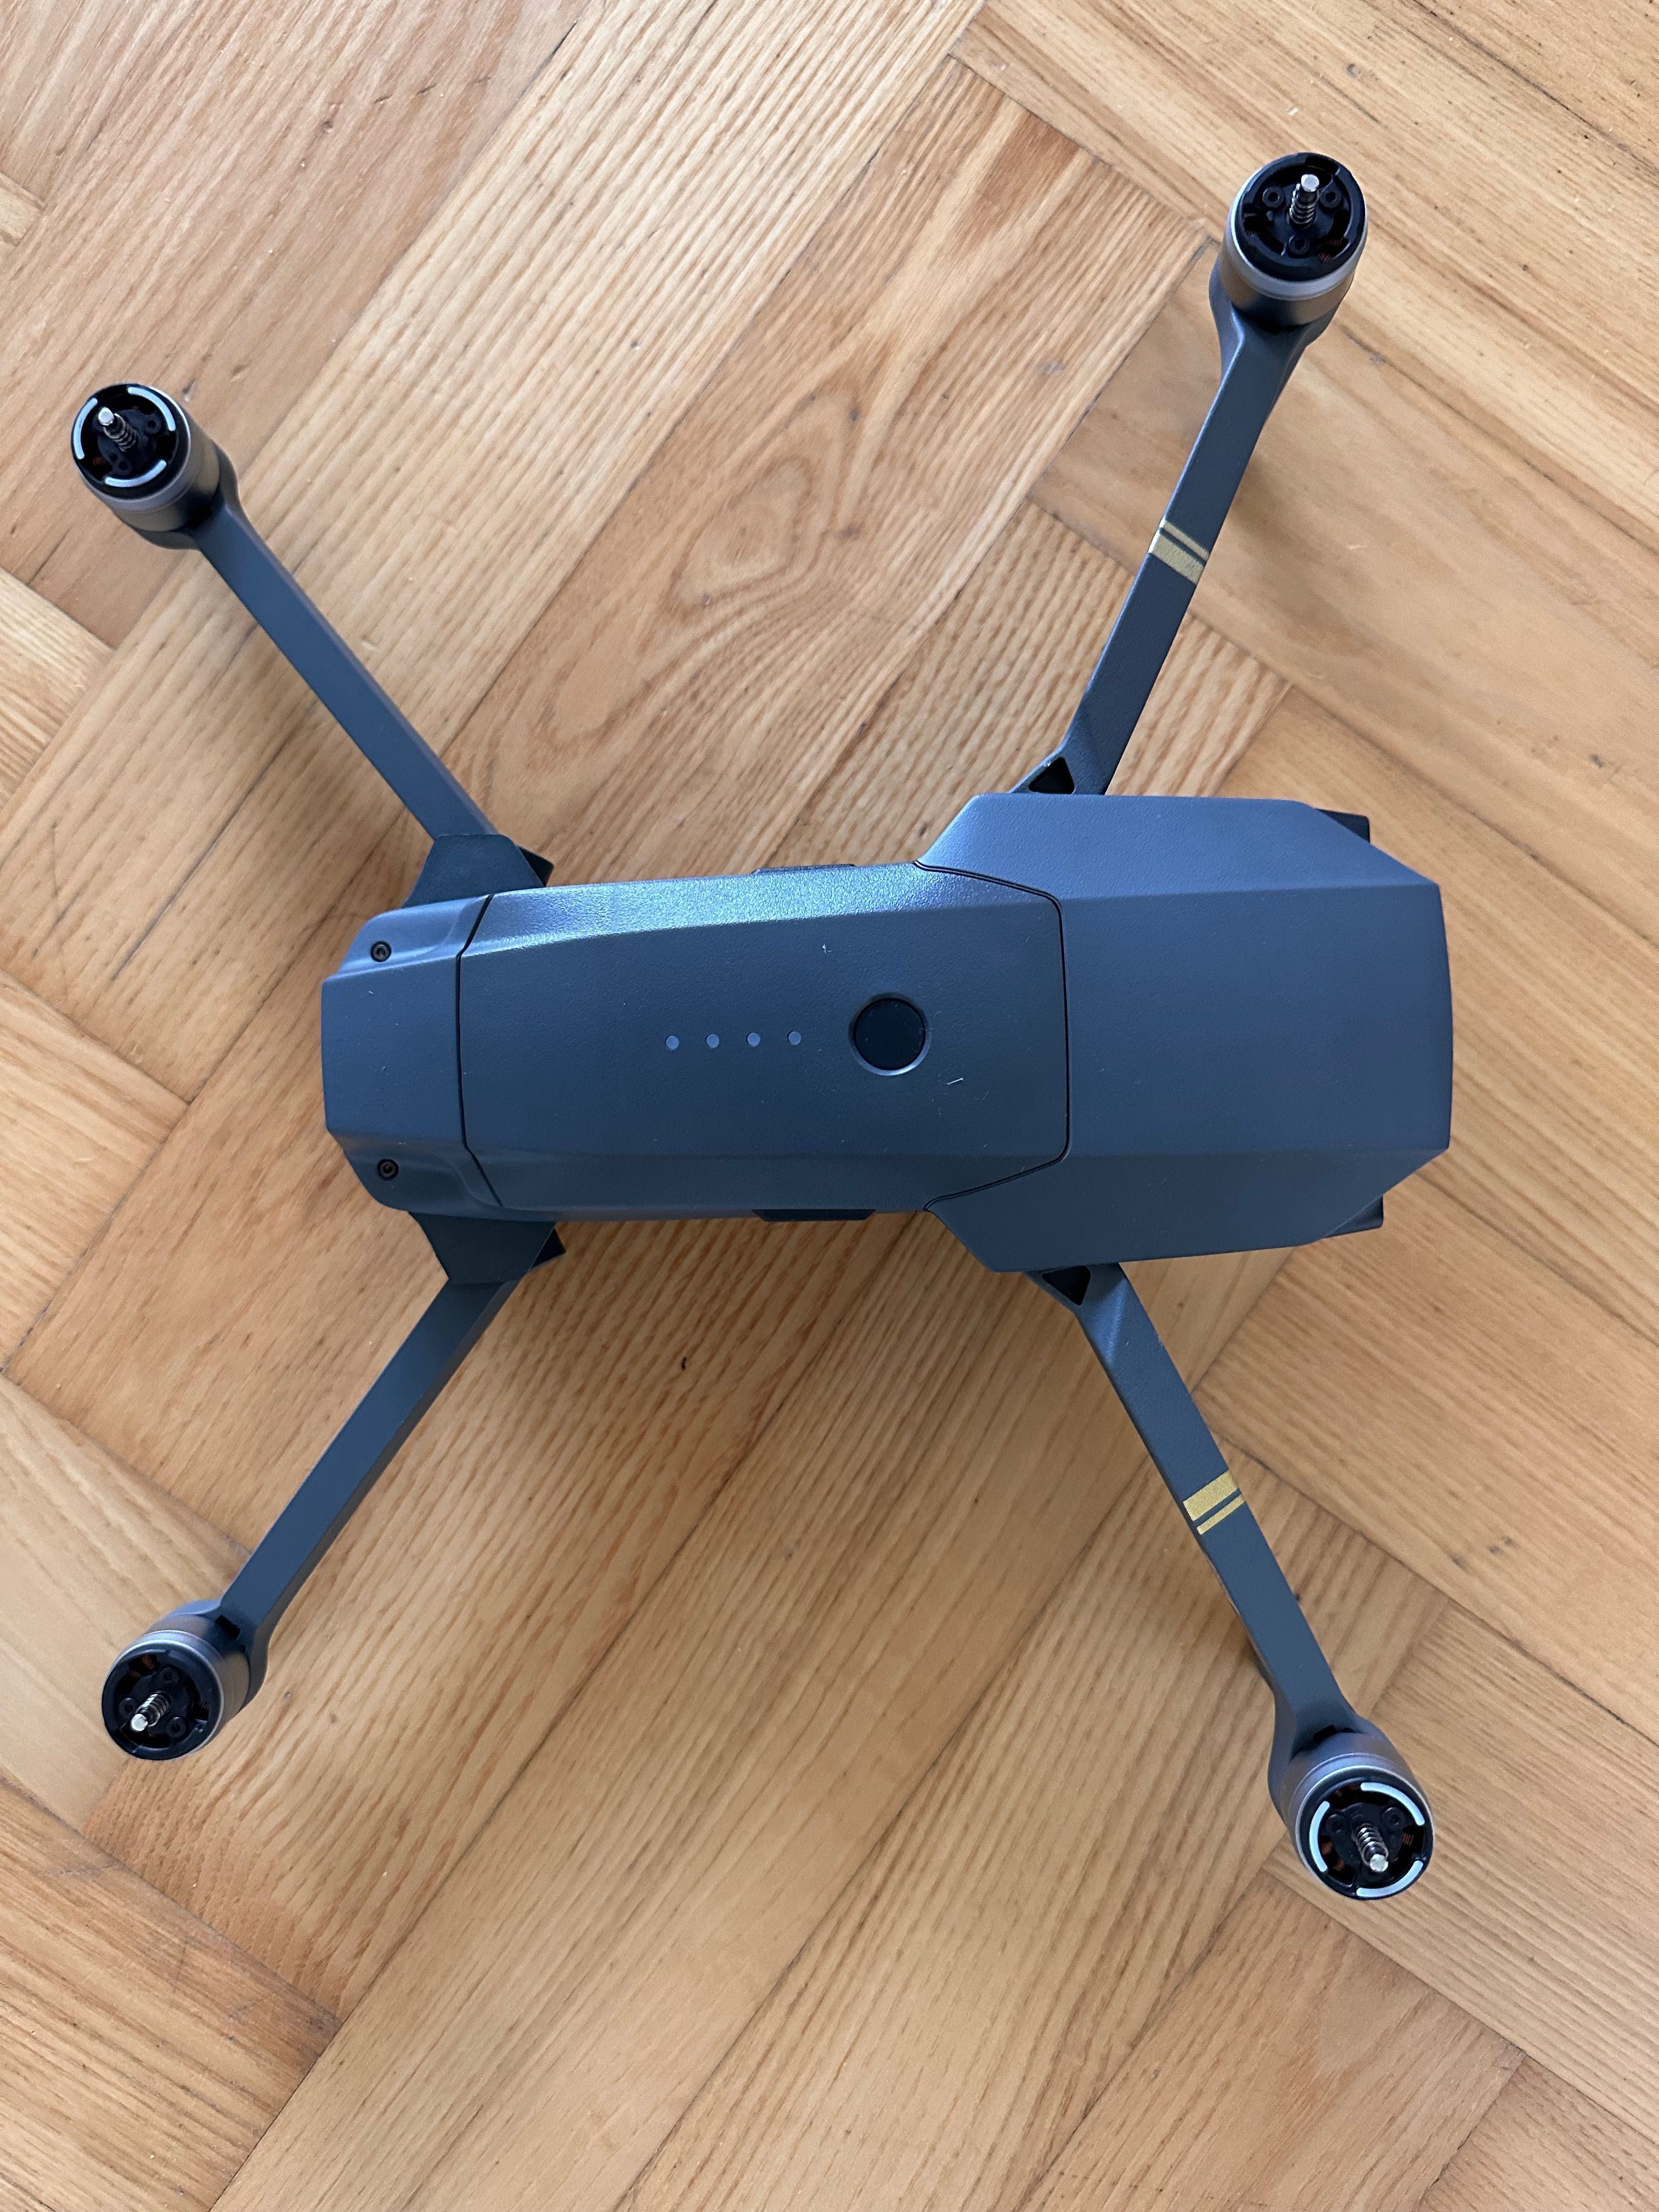 Dron Mavic Pro zestaw